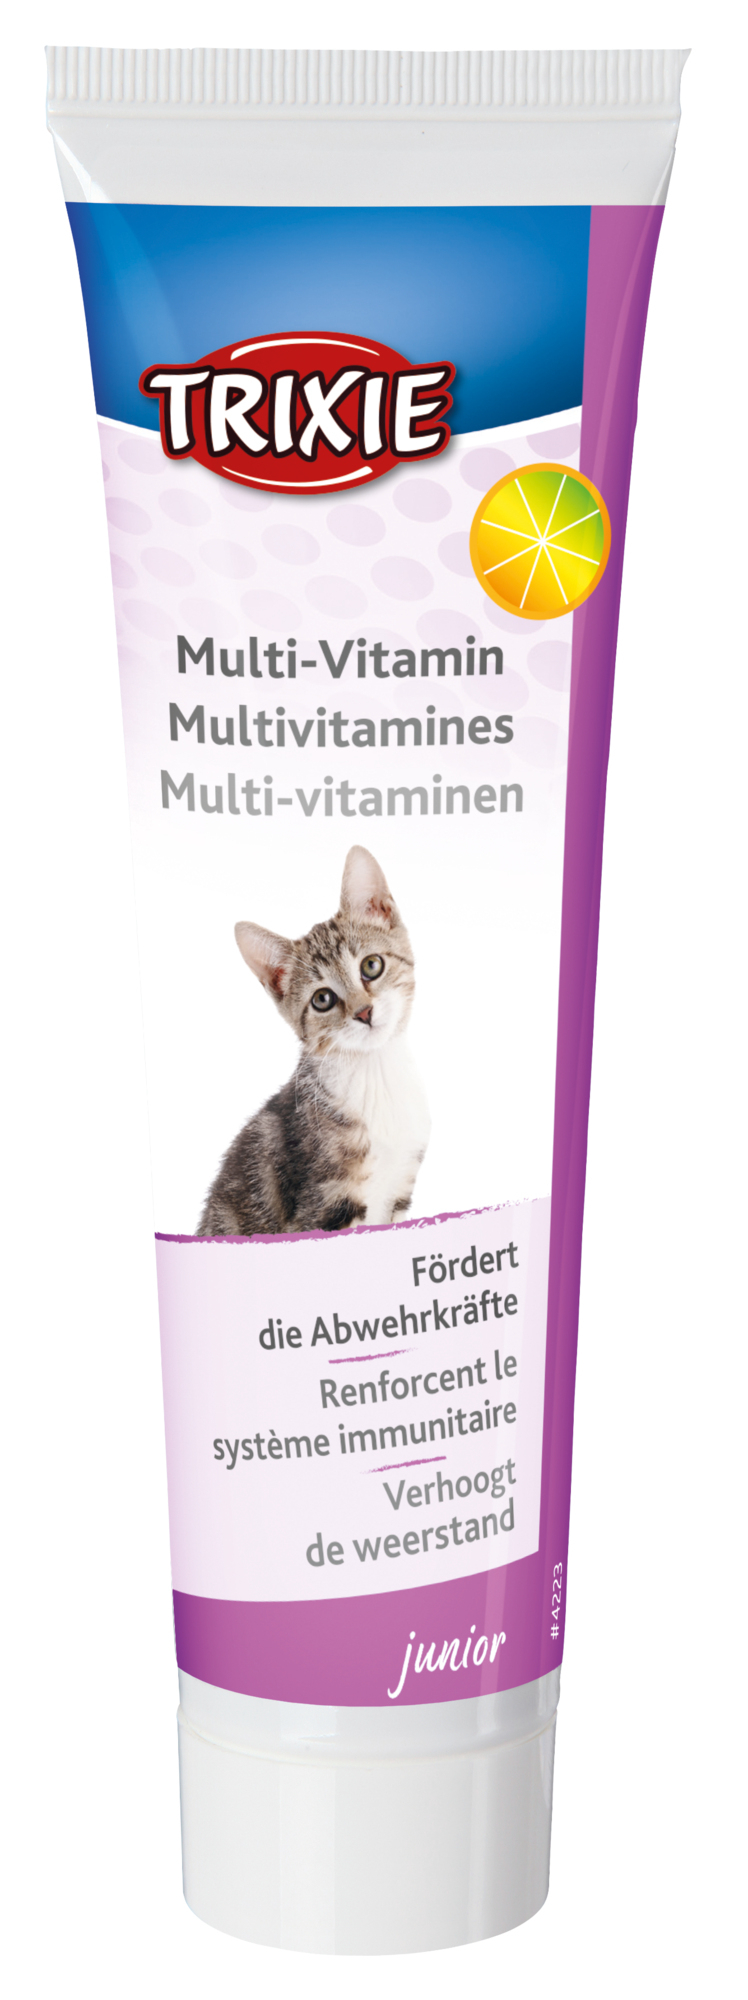 Pasta vitaminada para gatitos